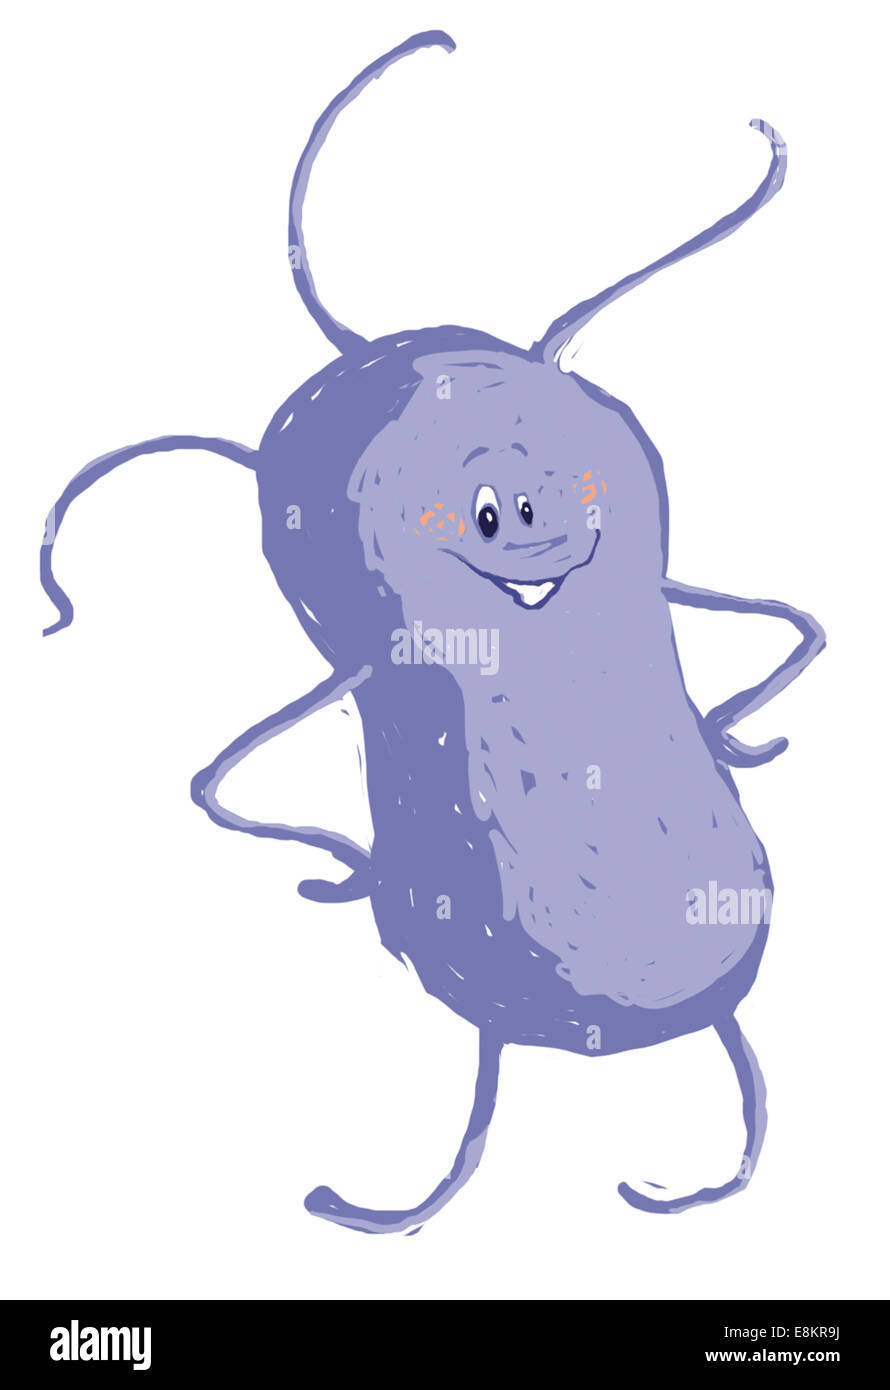 A good bacterium character. Stock Photo